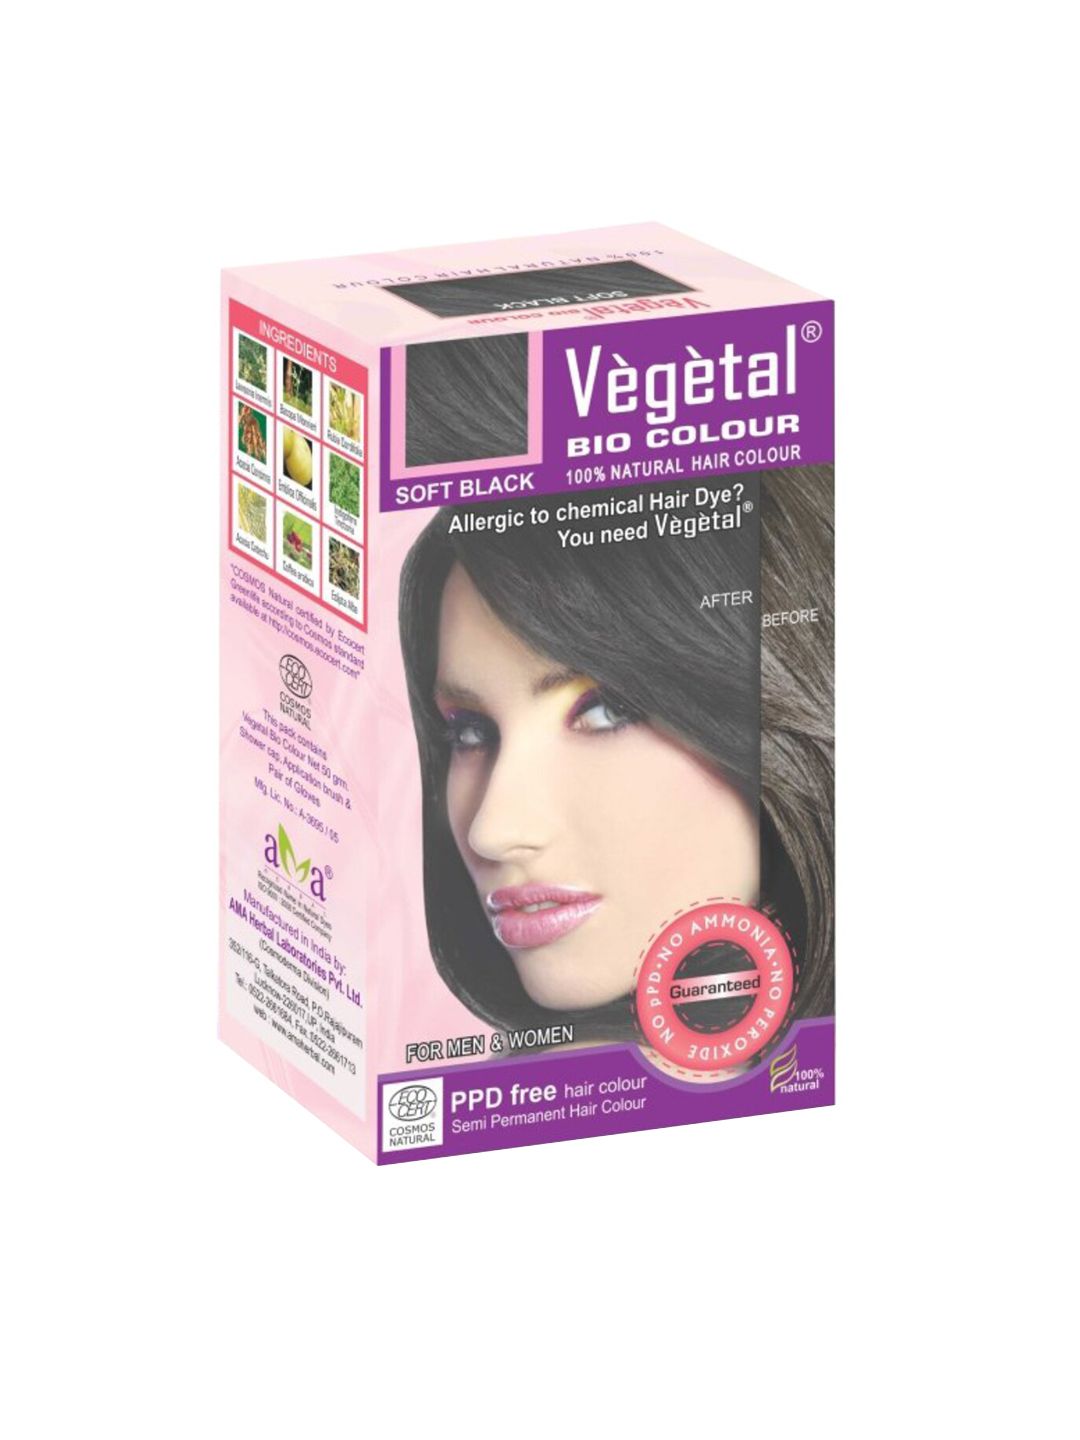 Vegetal Soft Black Hair Bio Colour 50 gm Price in India